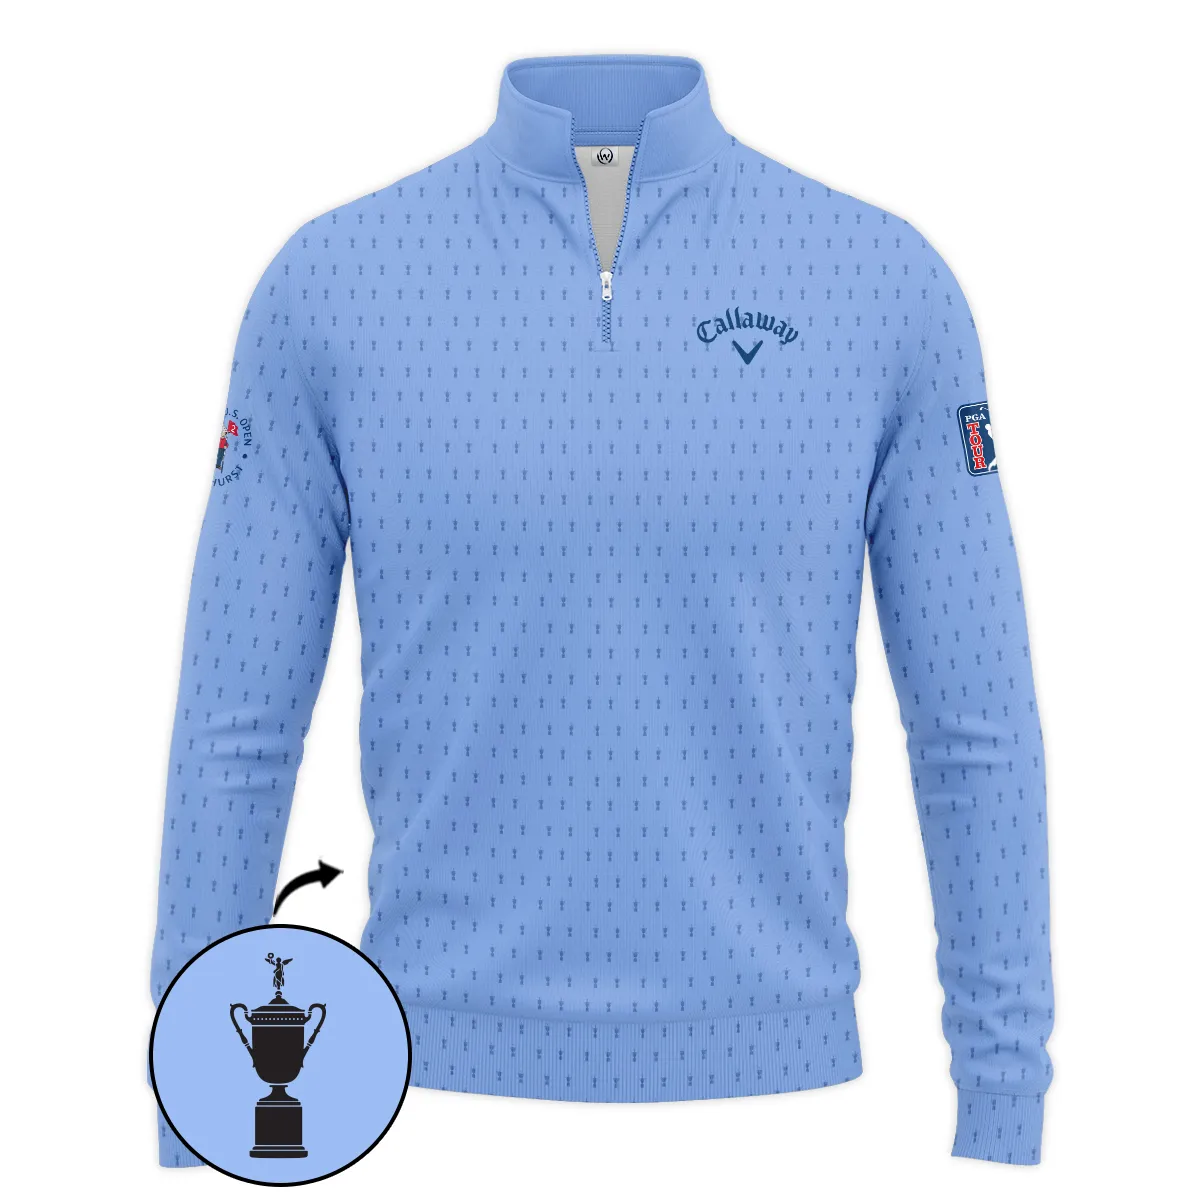 Golf Pattern Cup Blue 124th U.S. Open Pinehurst Pinehurst Callaway Sleeveless Jacket Style Classic